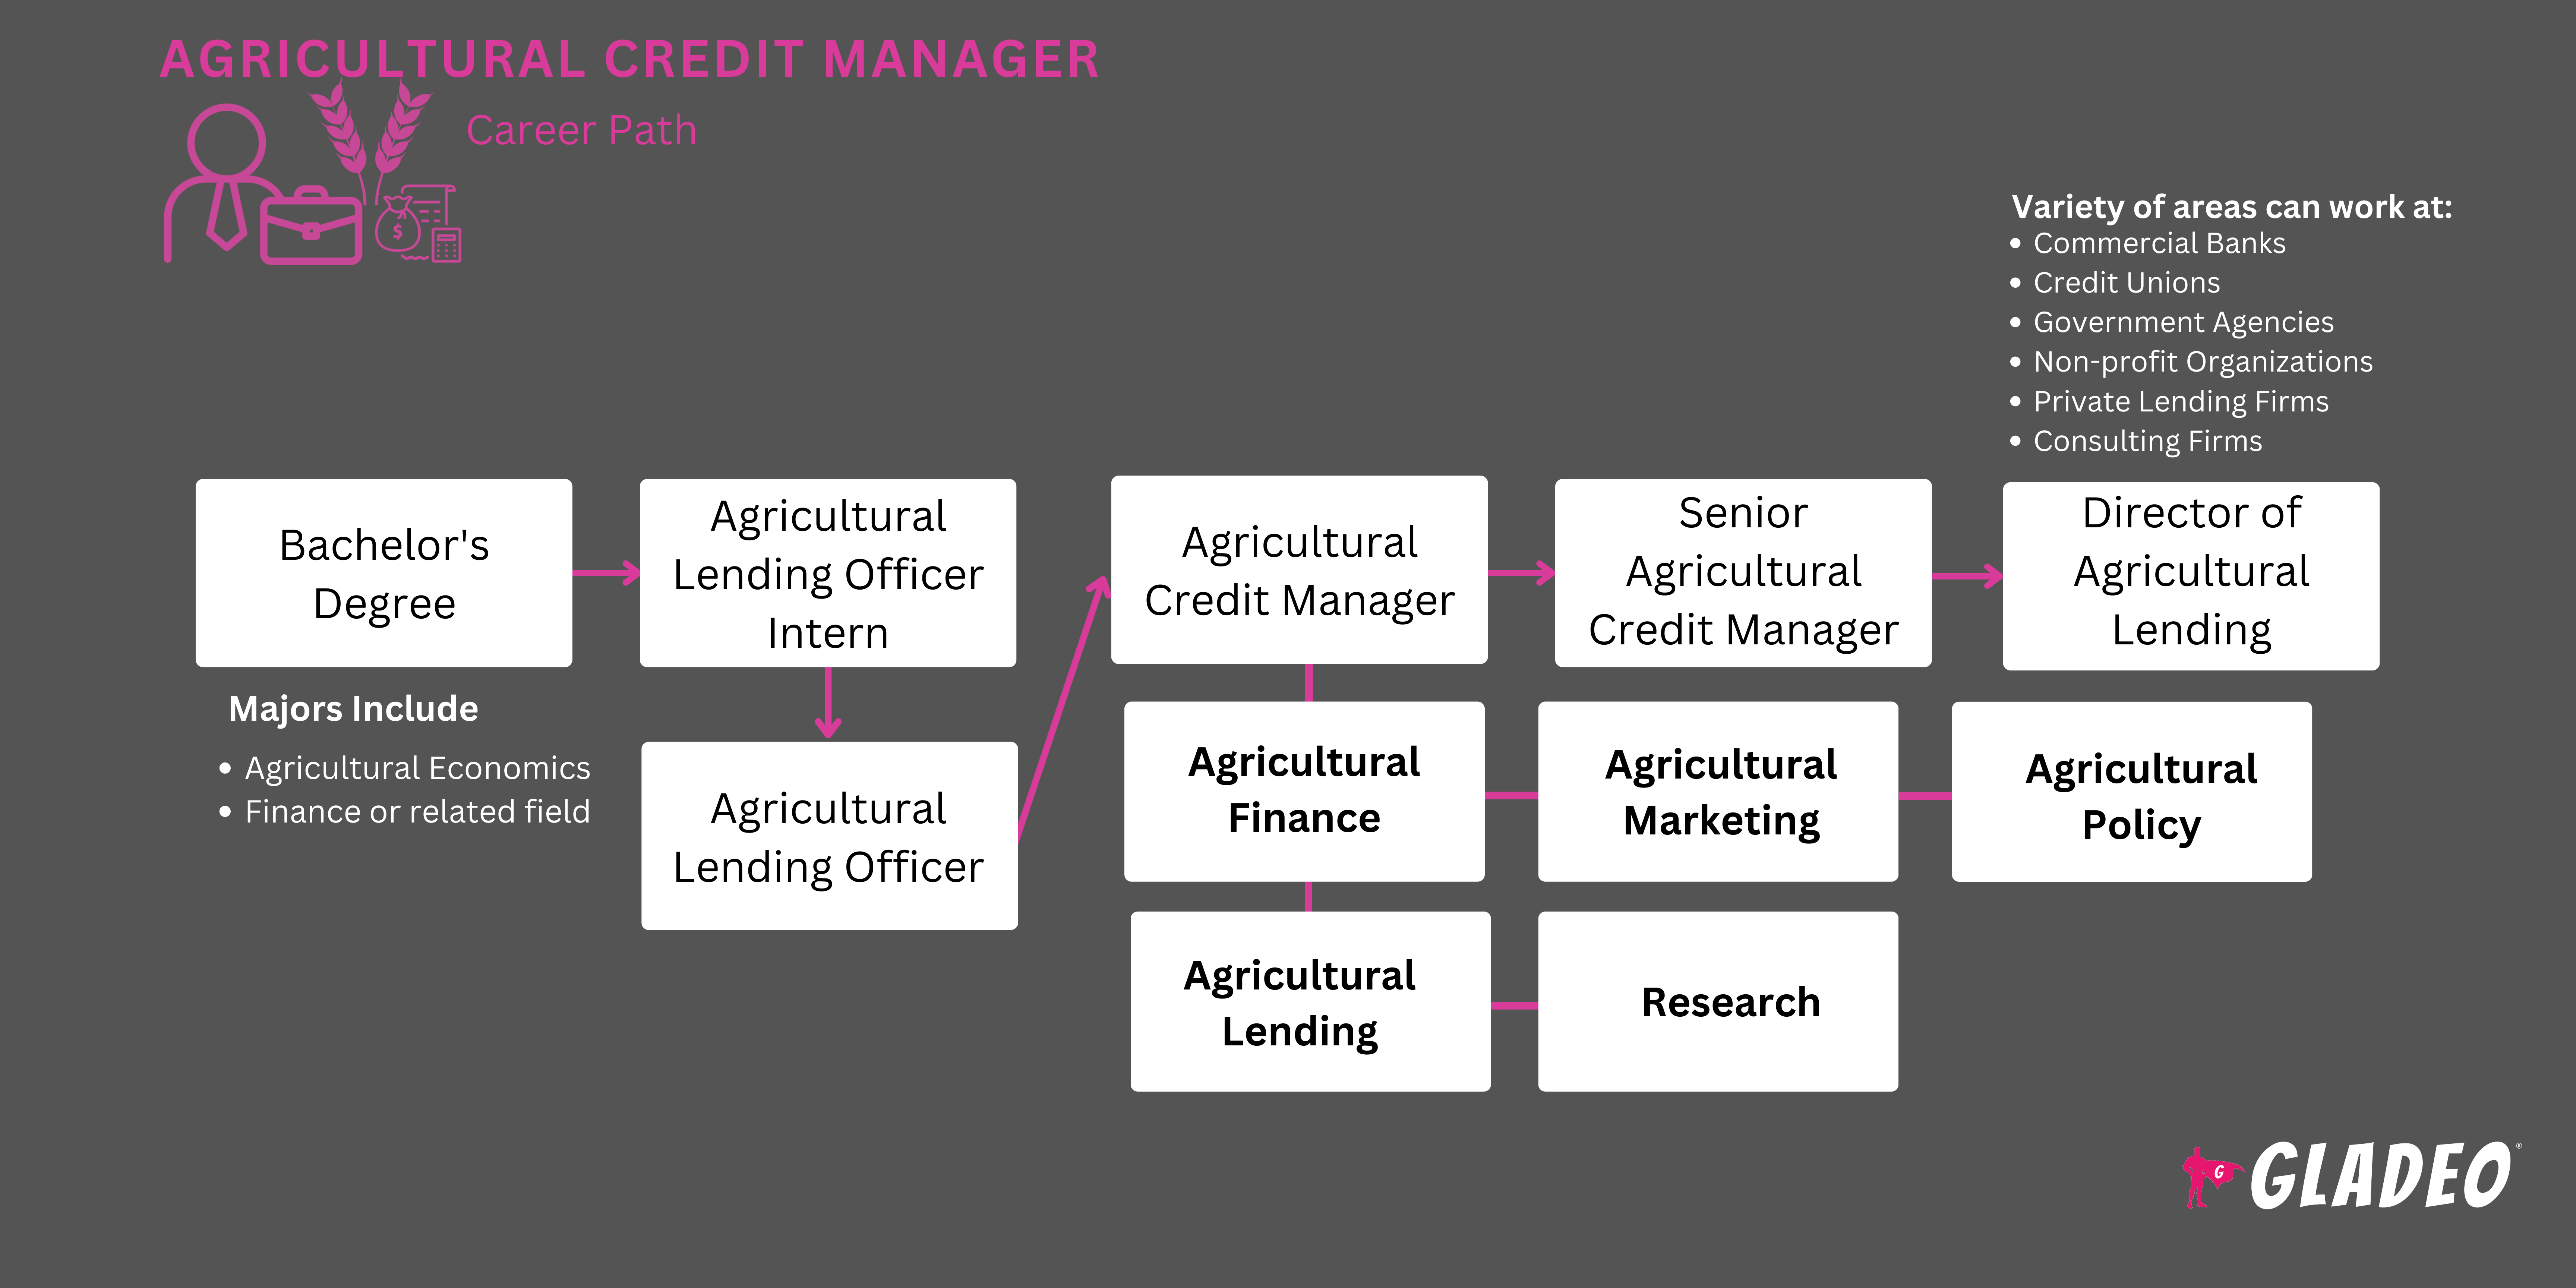 Pang-agrikultura Credit Manager